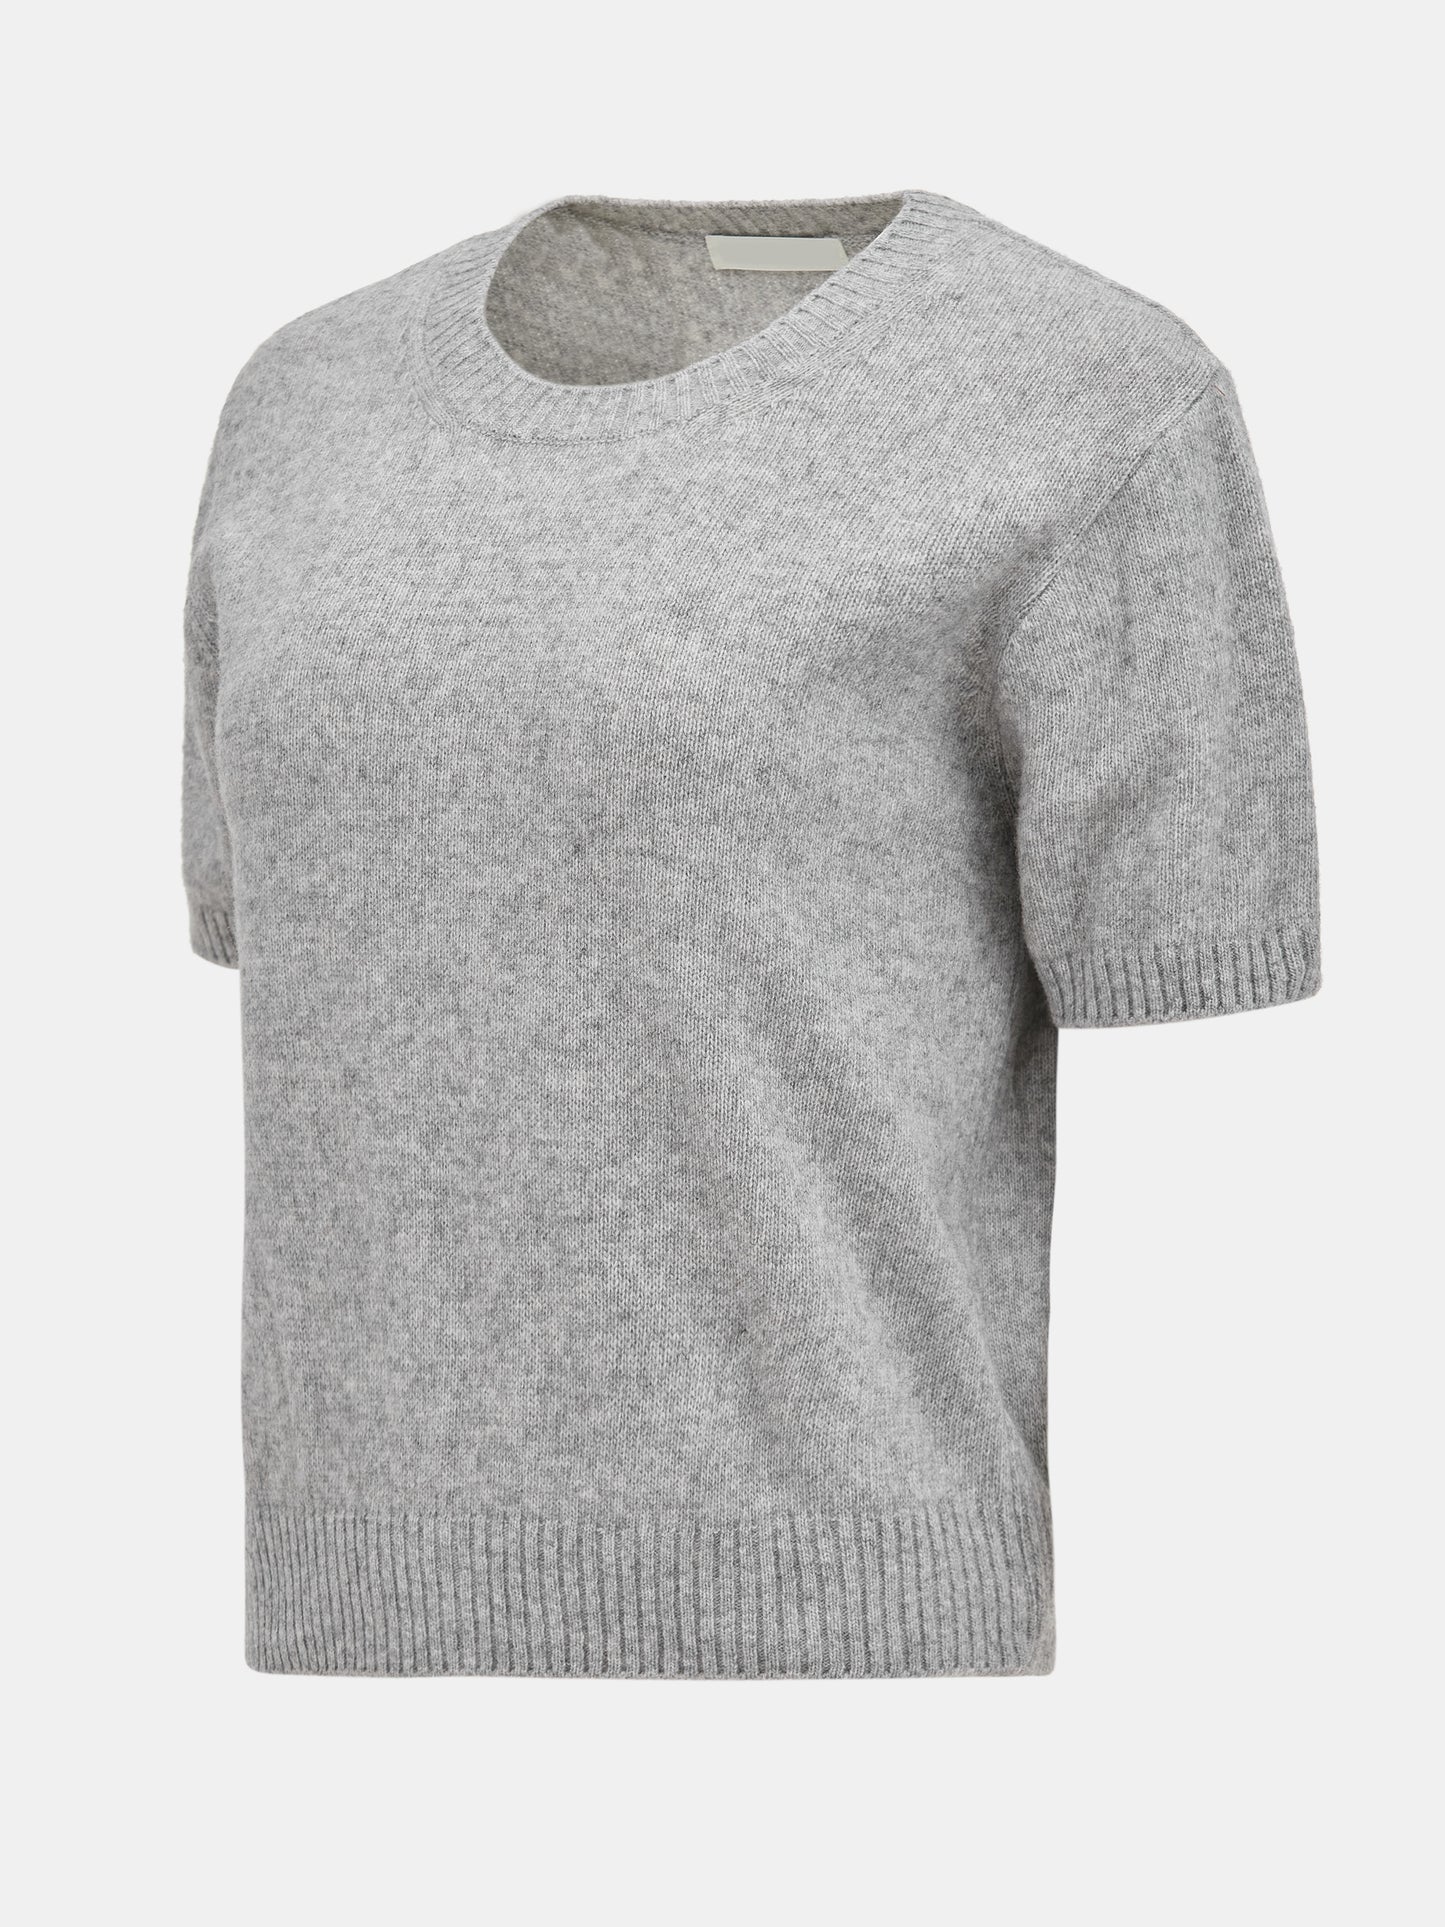 Two-Piece Cashmere Knit Set, Grey Melange